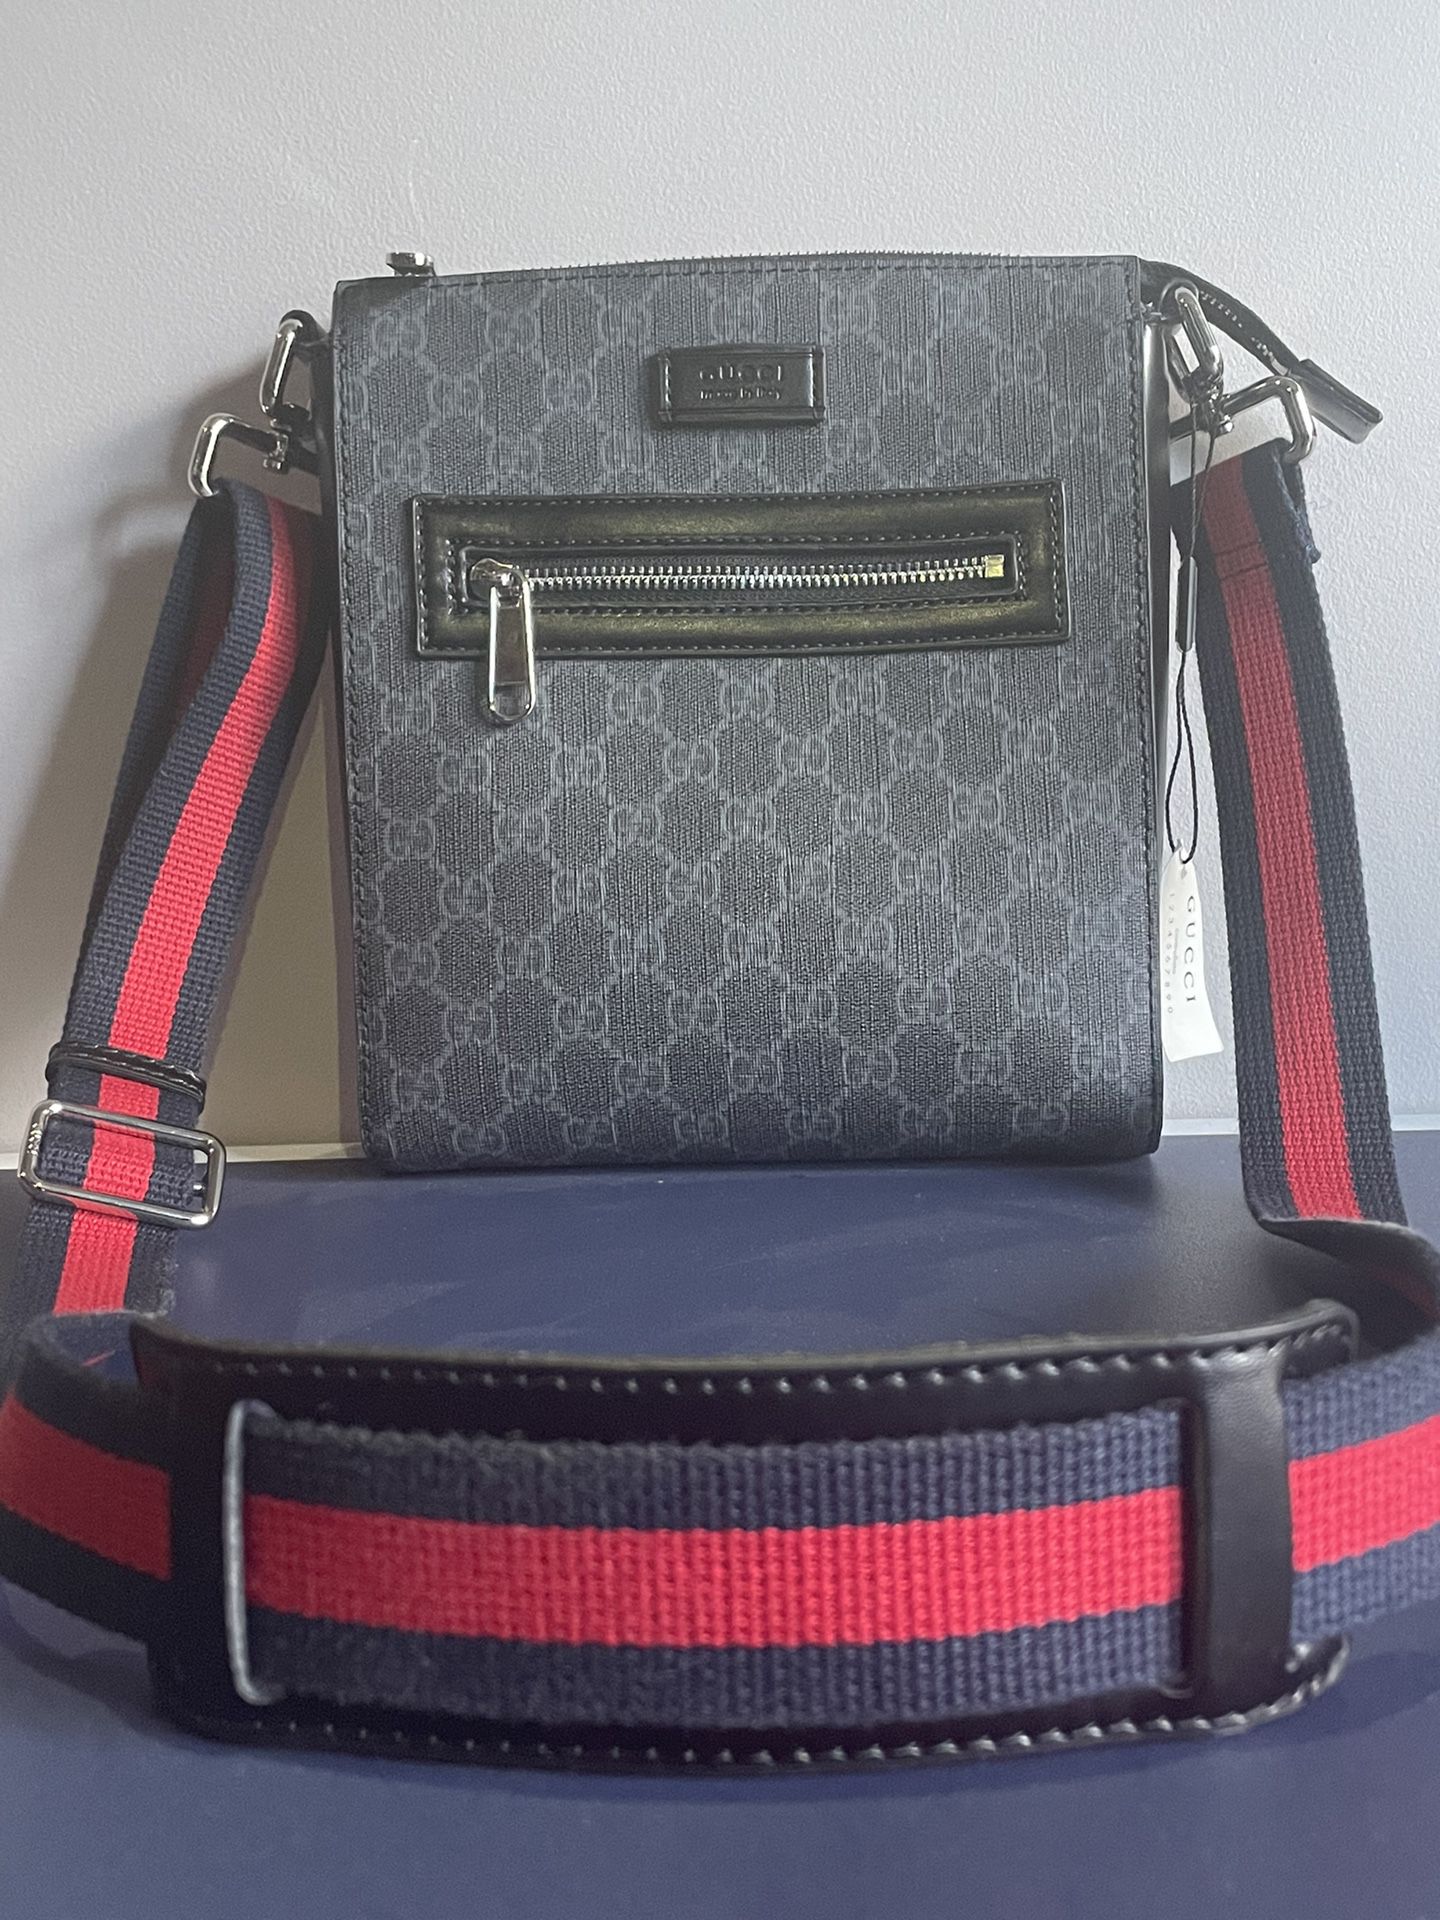 Gucci Messenger Bag Gently Worn $400